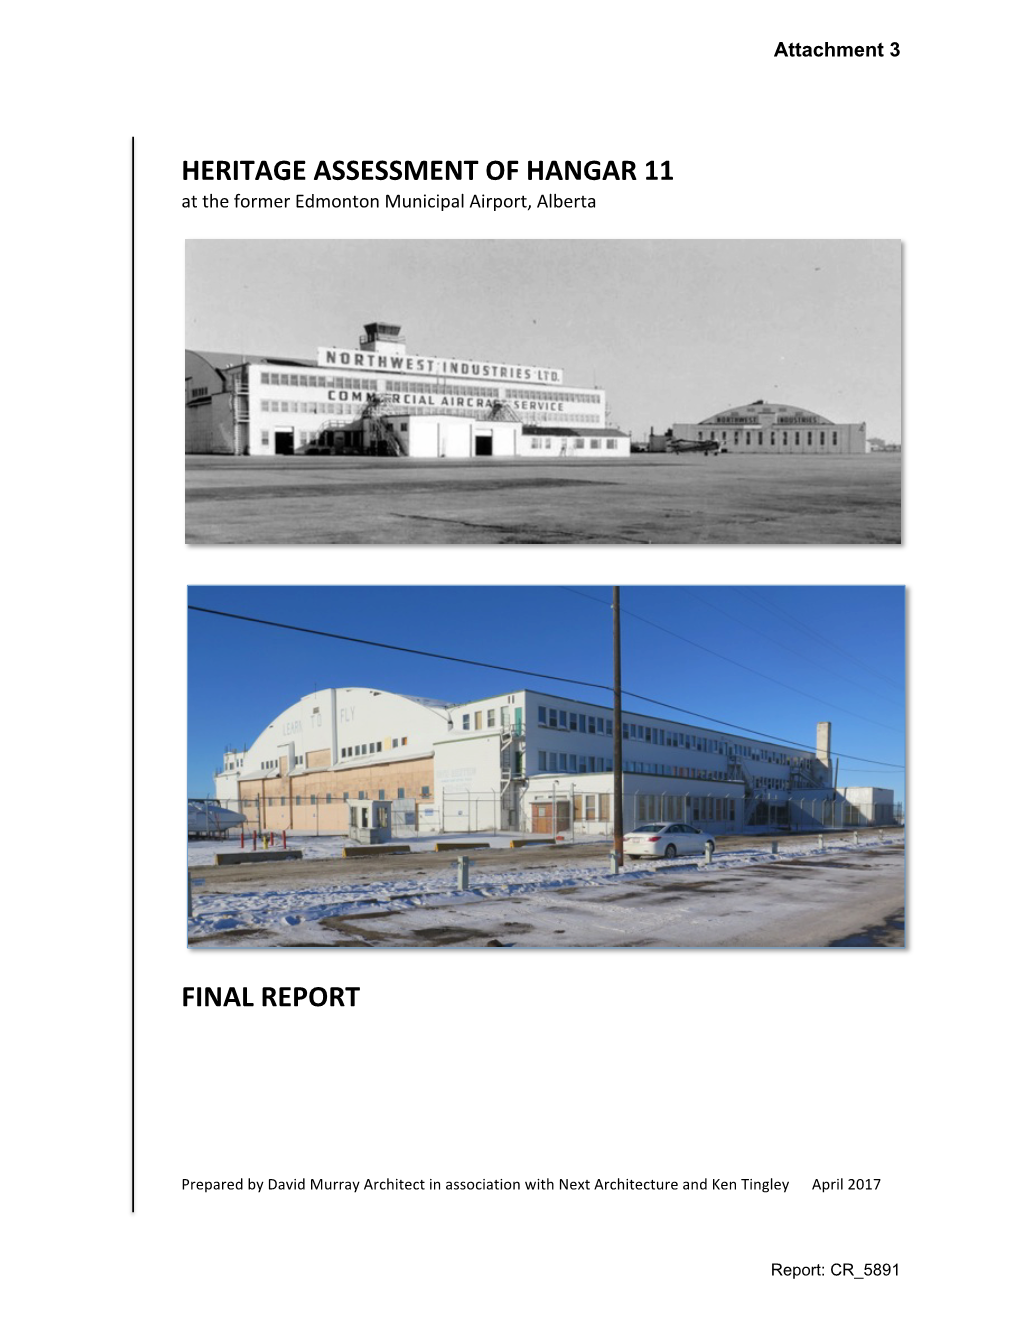 Hangar 11 Historical Assessment Report 2017